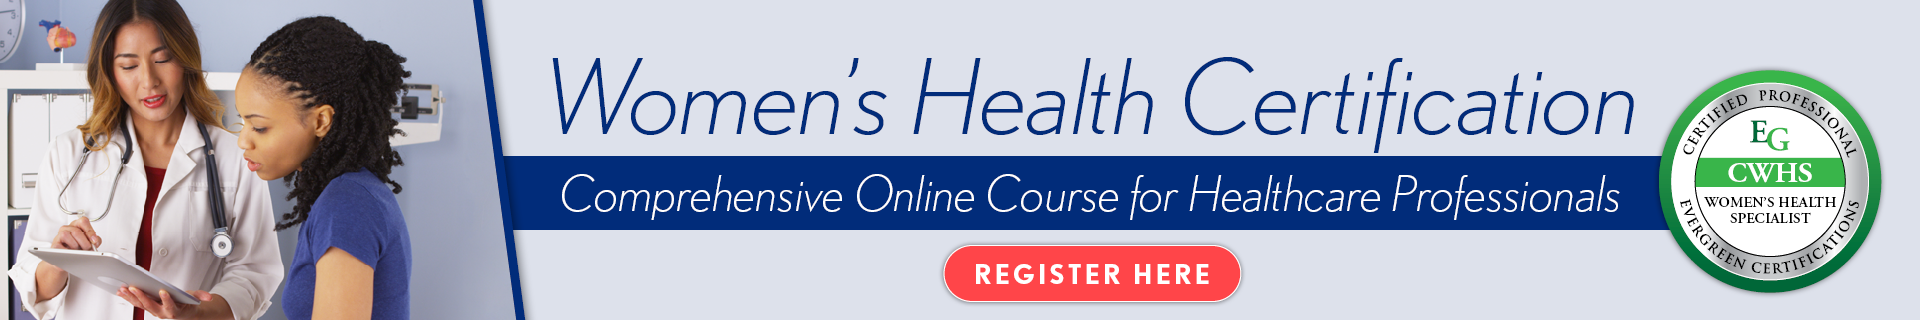 Women’s Health Certification Course